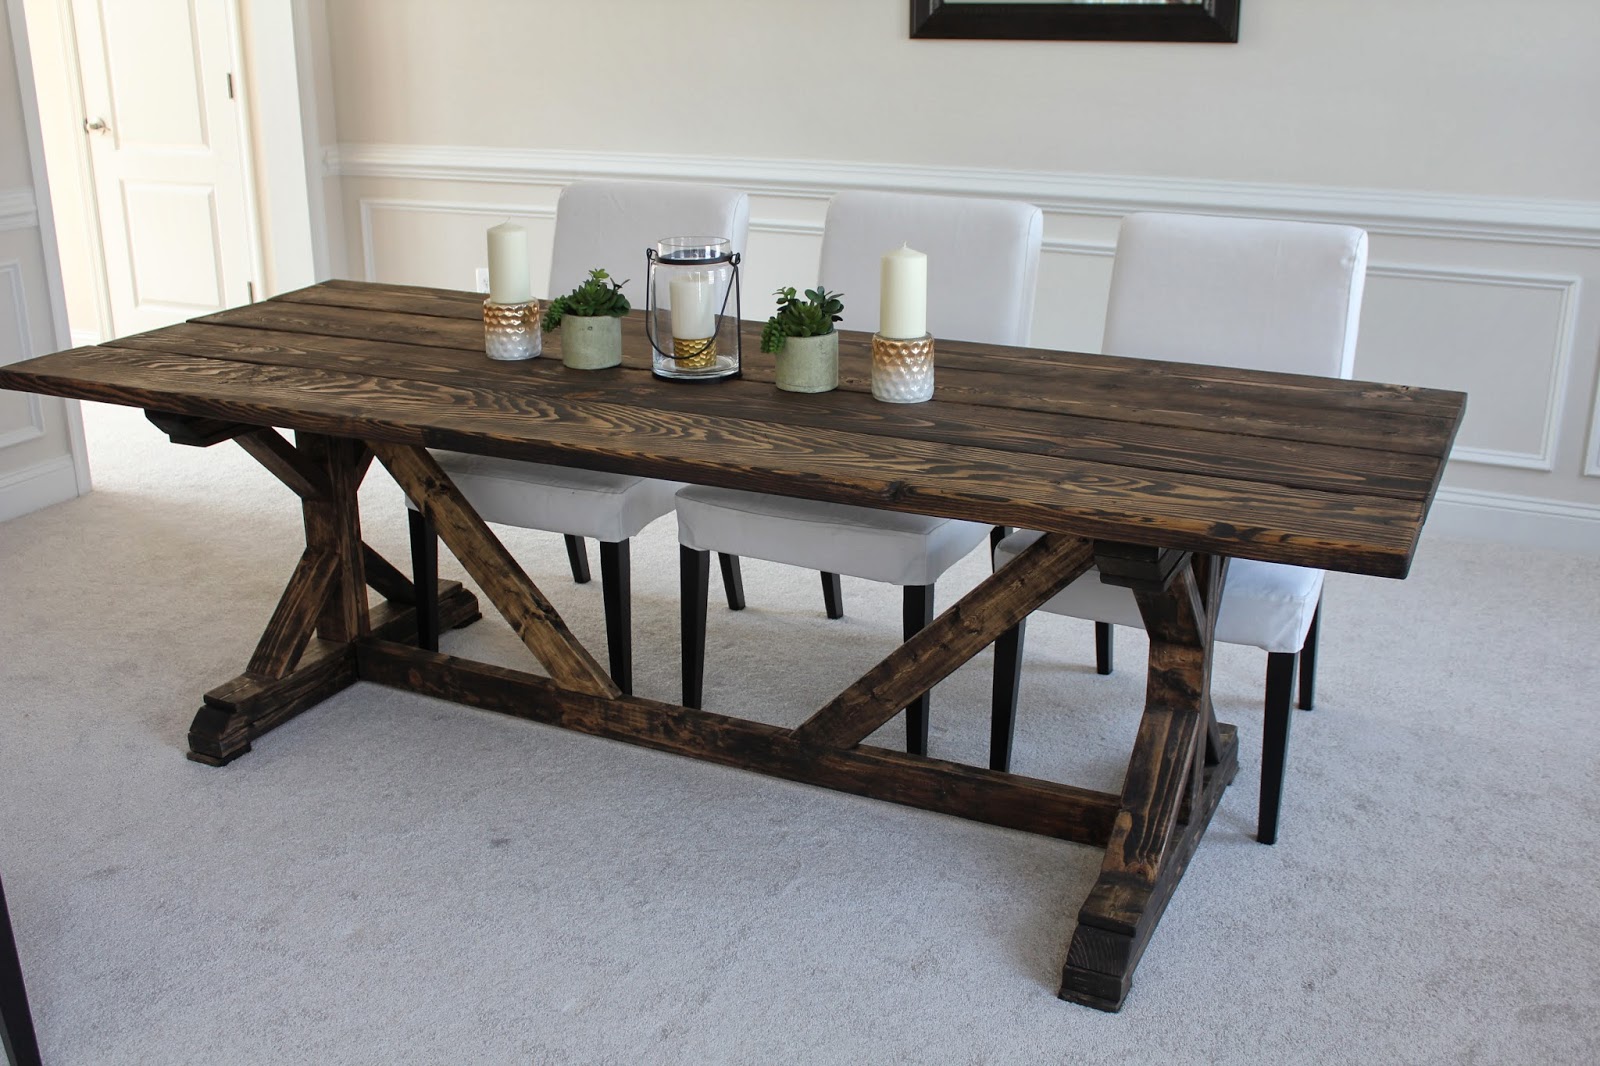 homevolution: Holy &amp;*%$ - I built a table!